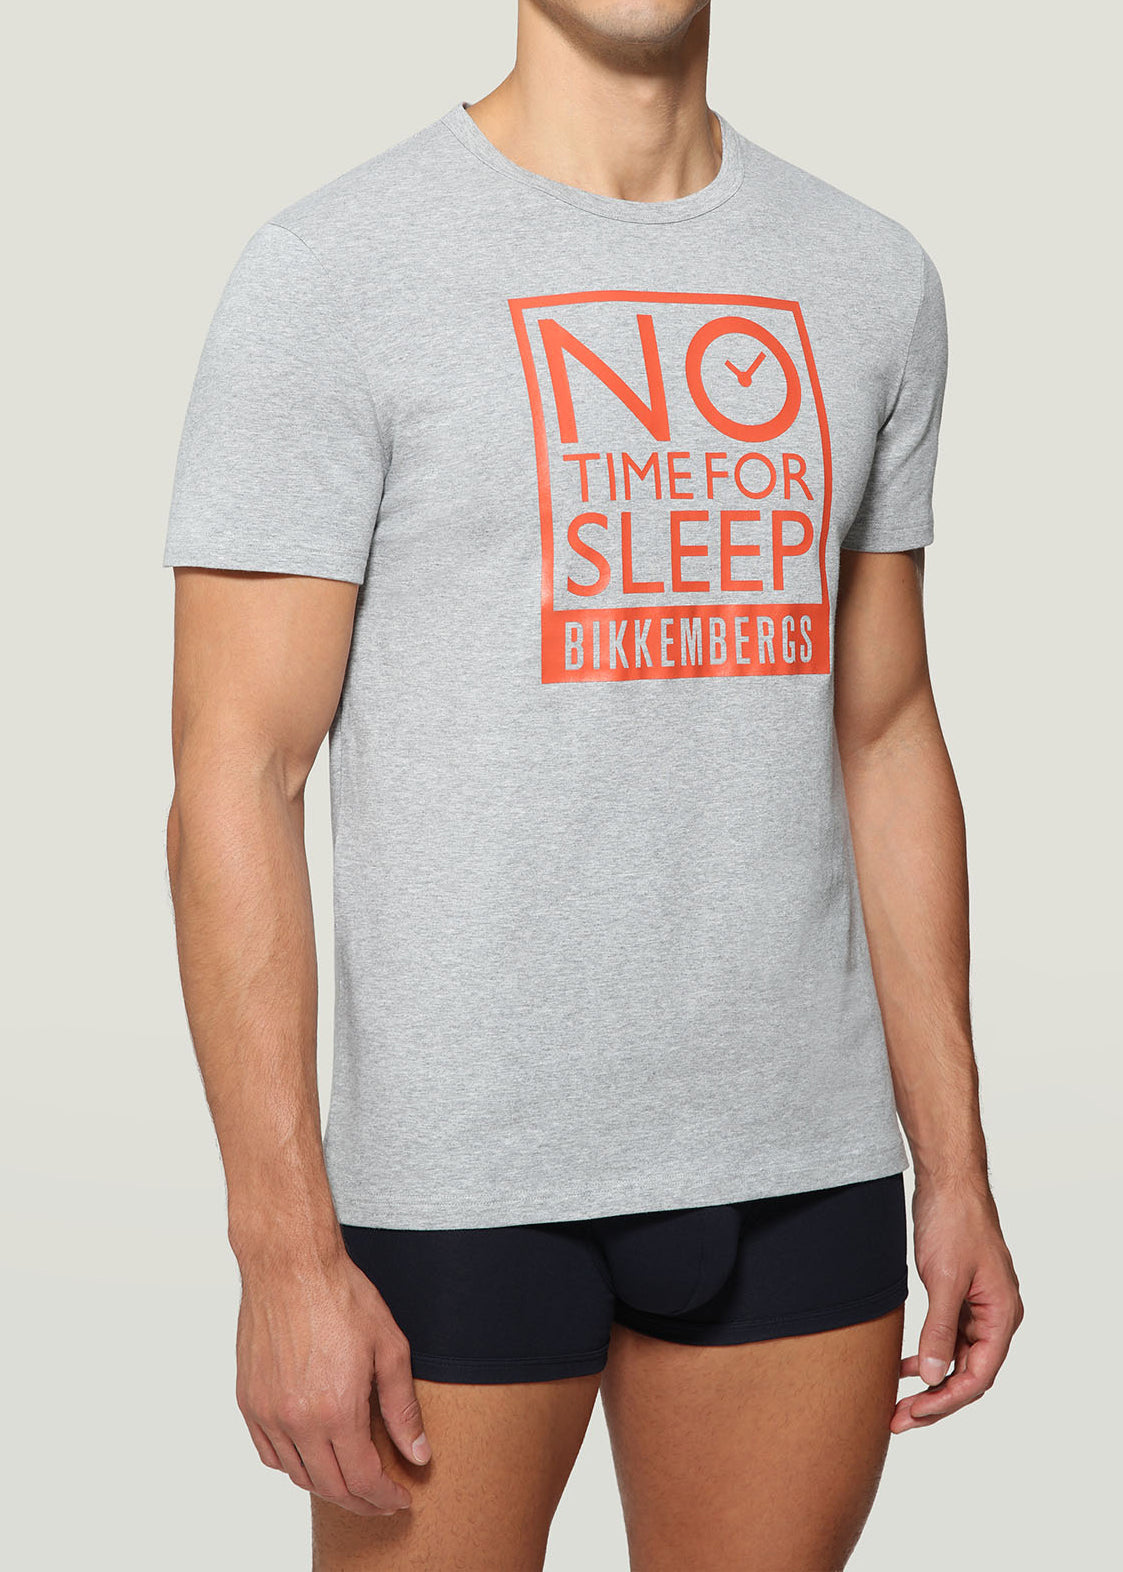 Bikkembergs T-Shirt NO TIME grau-melange mit orangenen Grafikprint